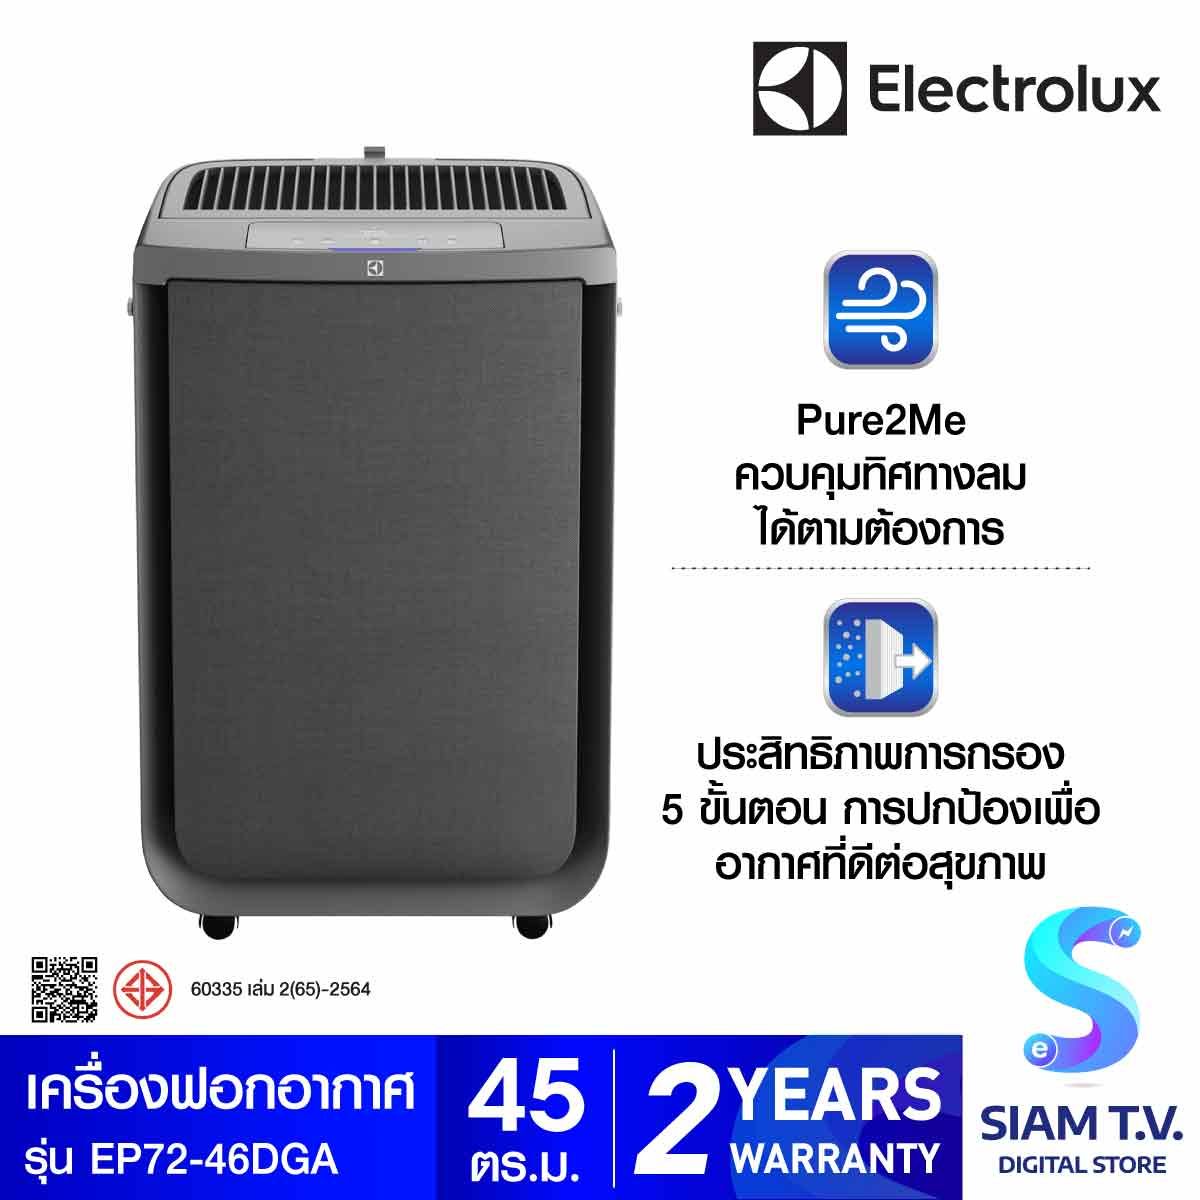 Electrolux  UltimateHome 700 เครื่องฟอกอากาศ ควบคุมความชื้น45ตรม.UV PM1.0 ขนาด 45 ตร.ม.  รุ่นEP72-46DGA